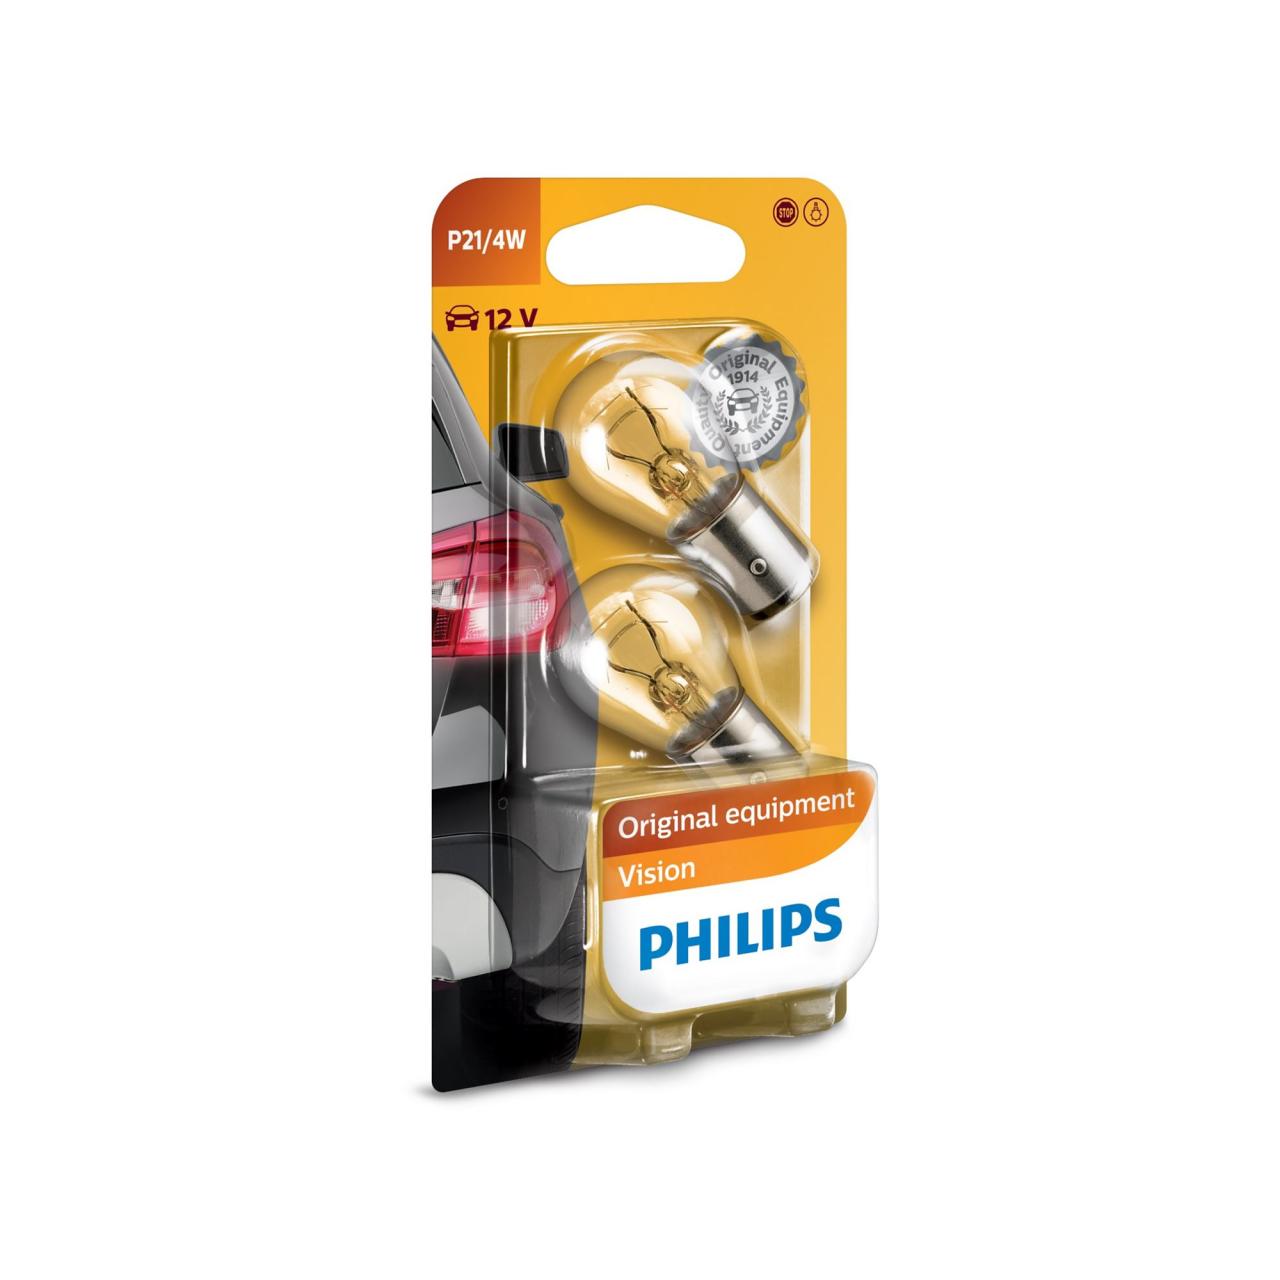 PHILIPS Vision Kugellampe P21/4W